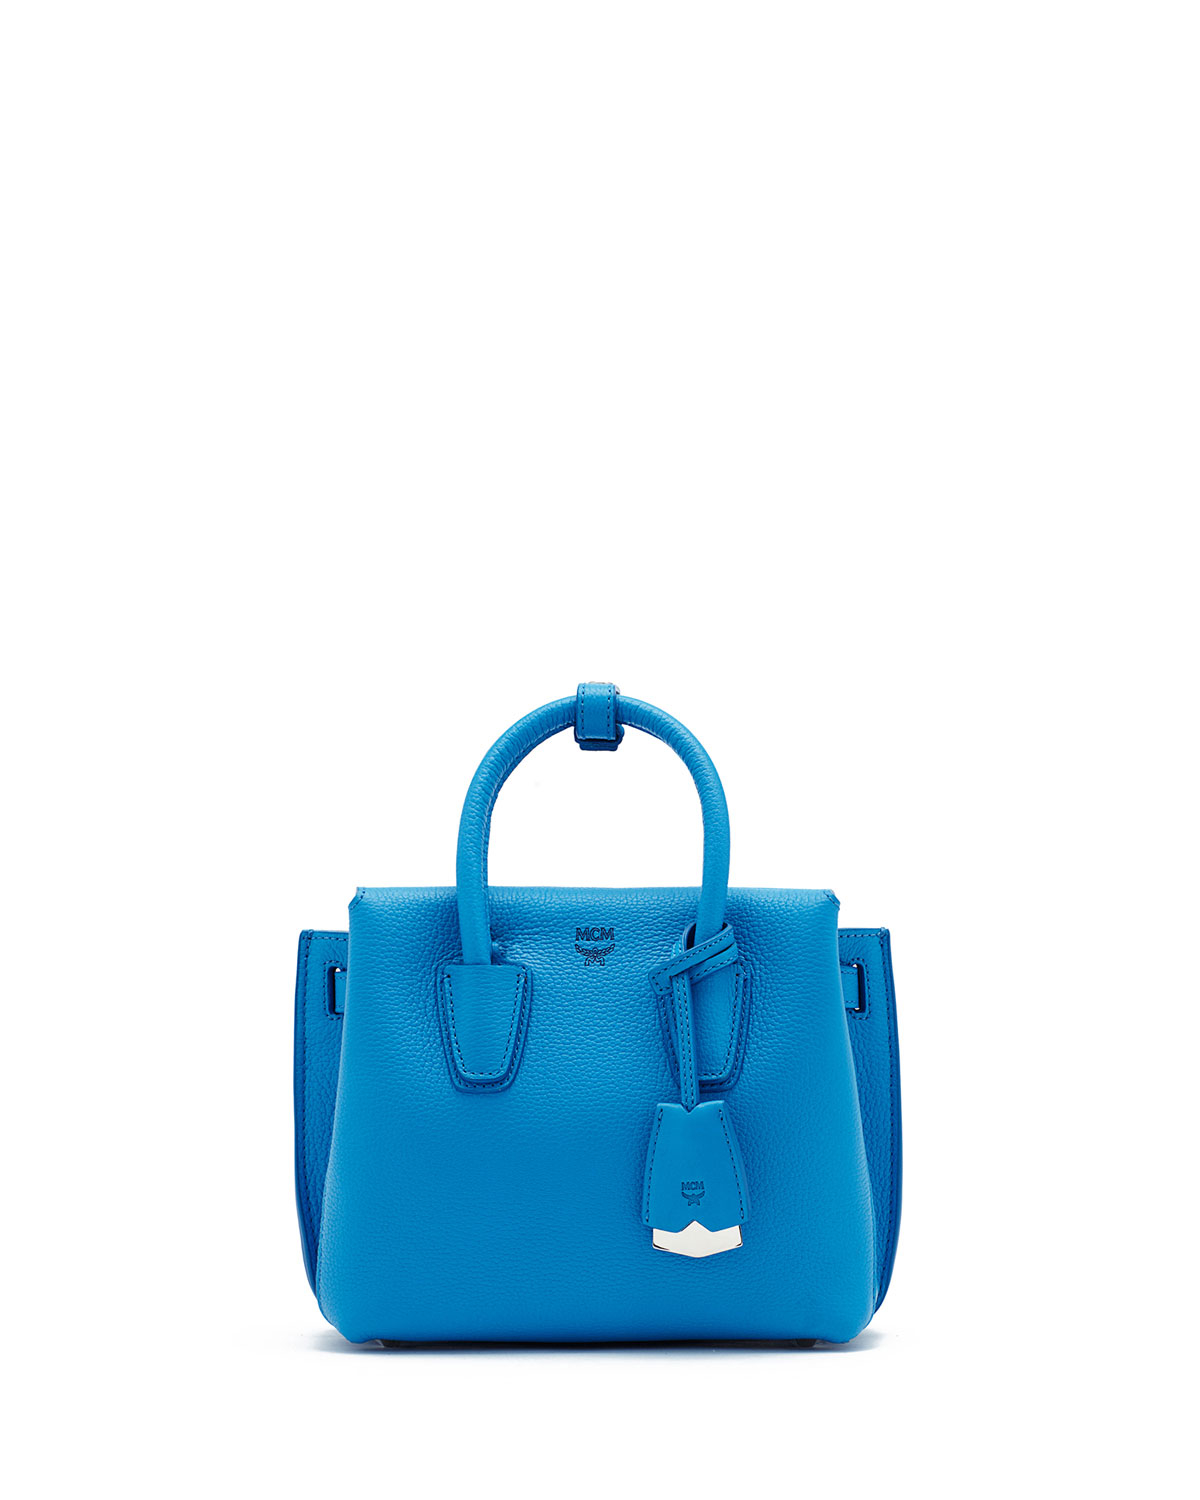 MCM Milla Mini Tote Bag in Blue - Lyst